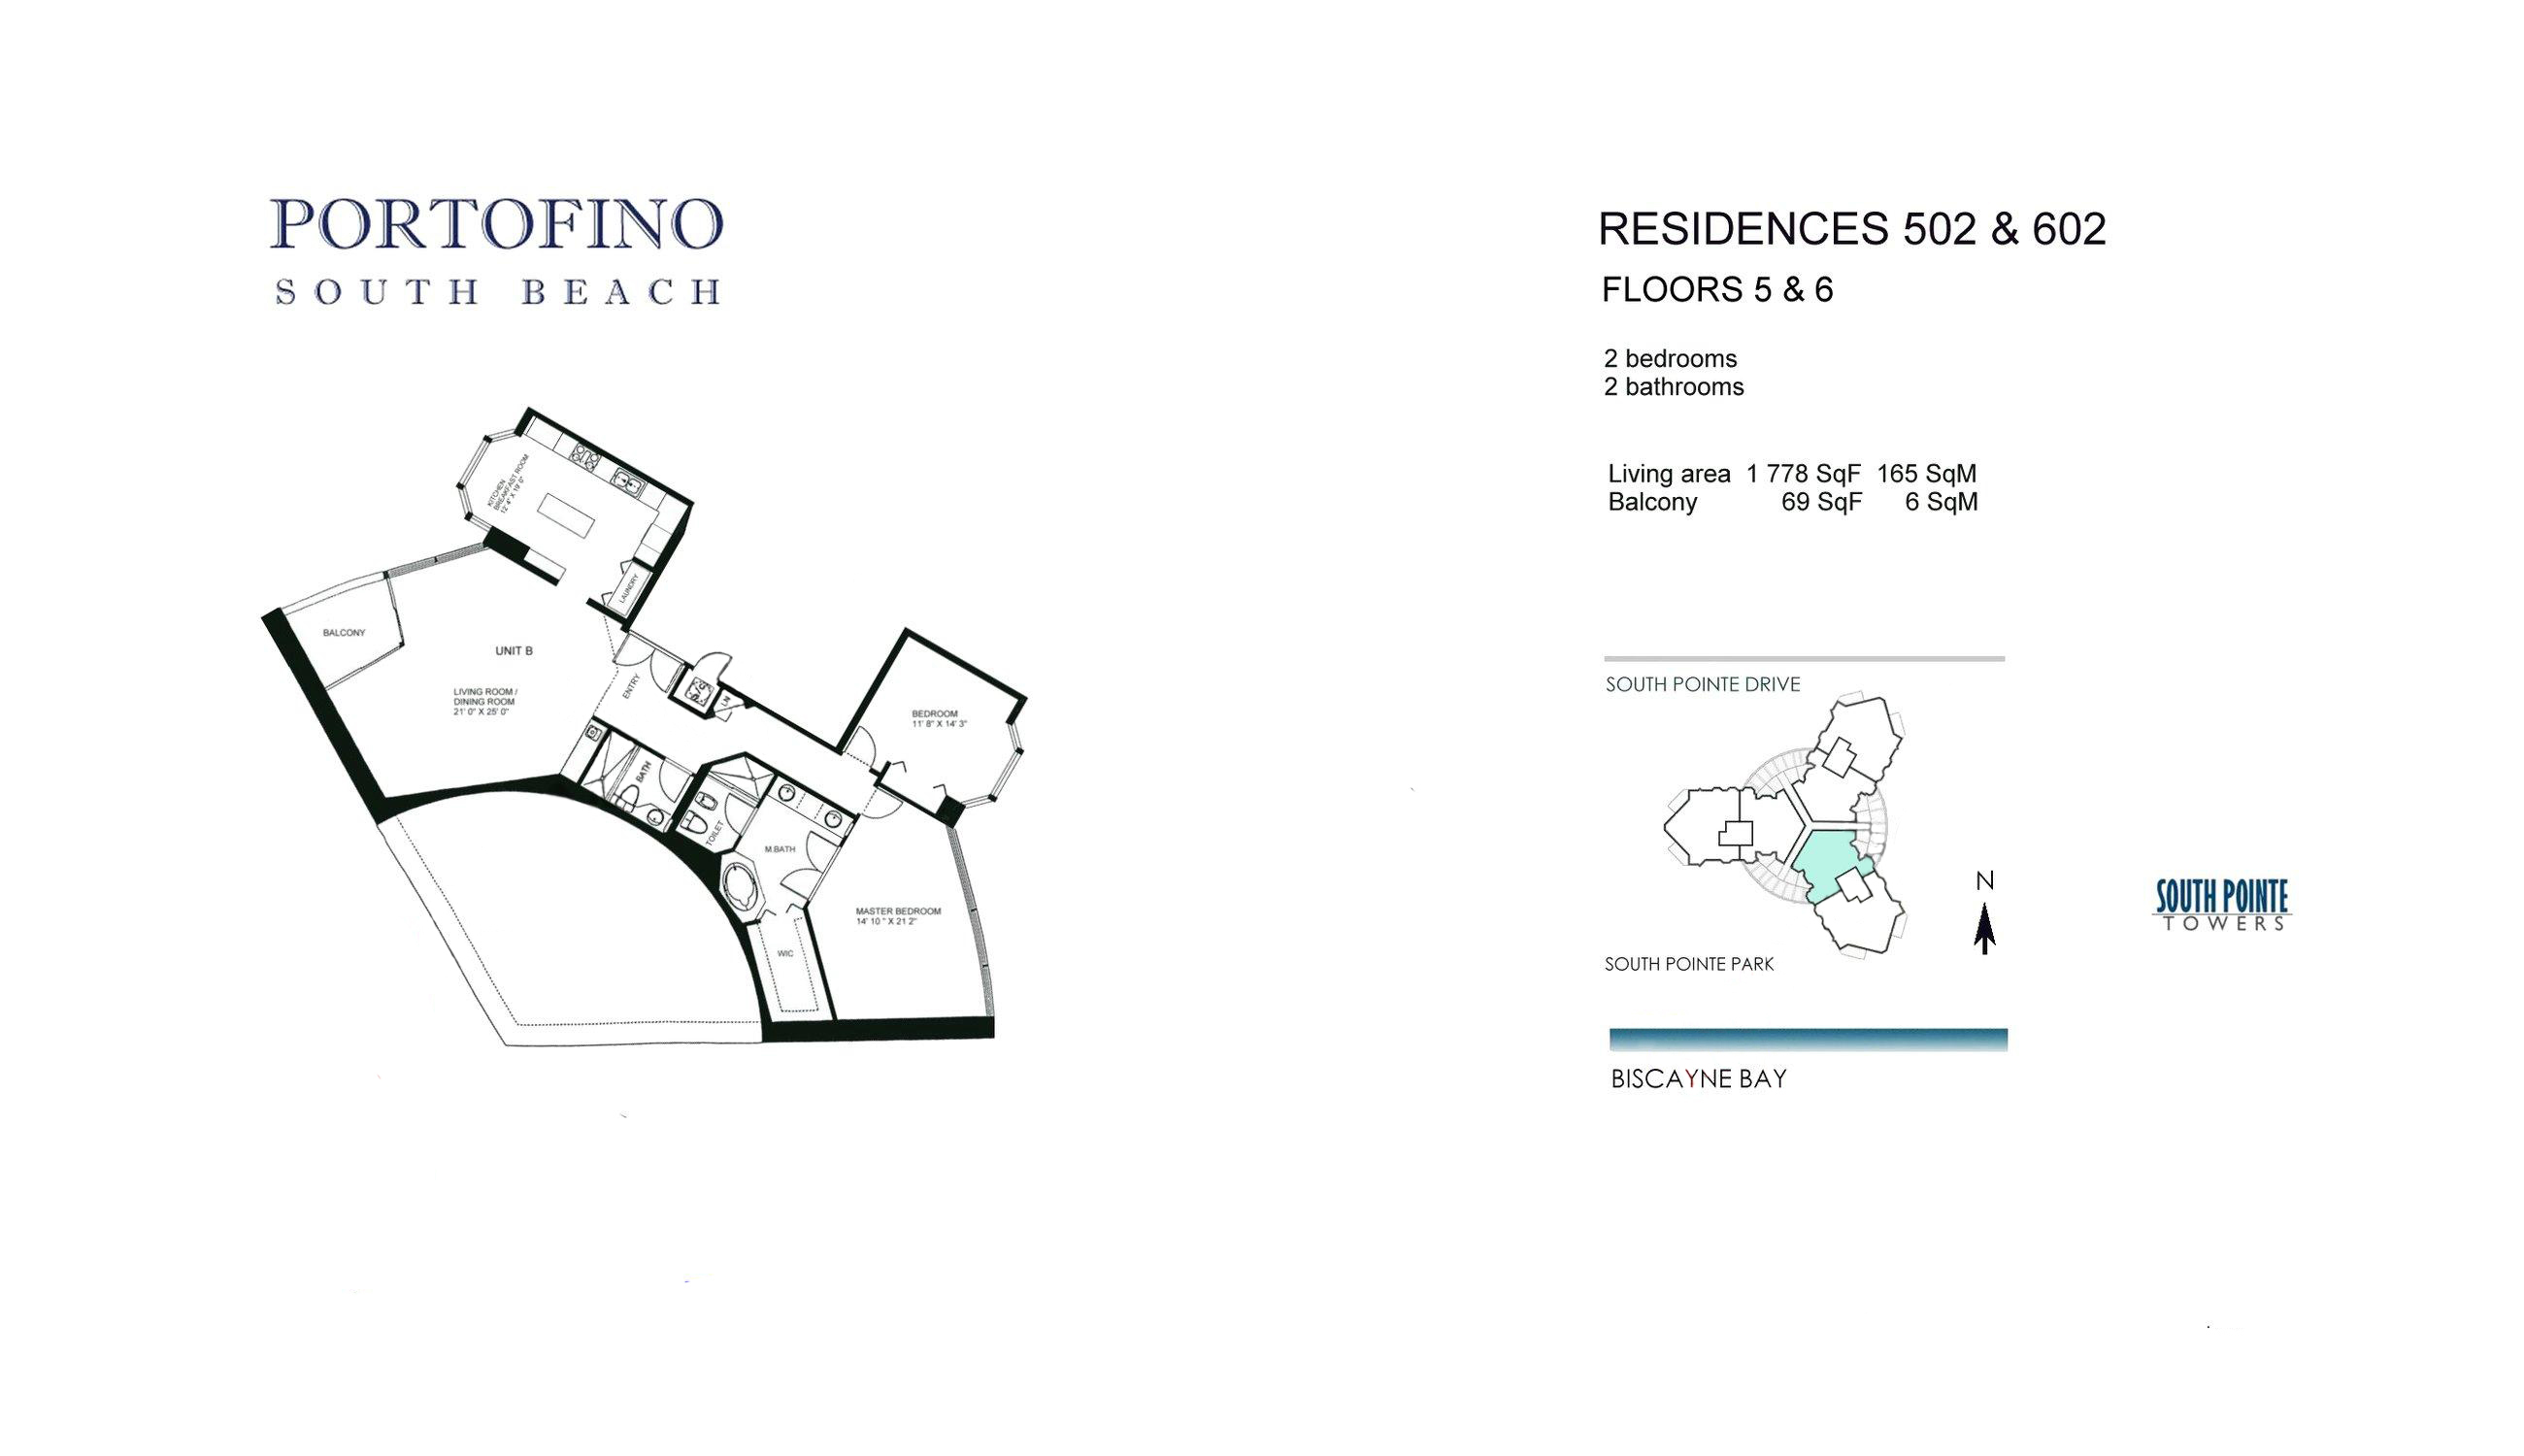 Portofino Tower Residences 502 & 602